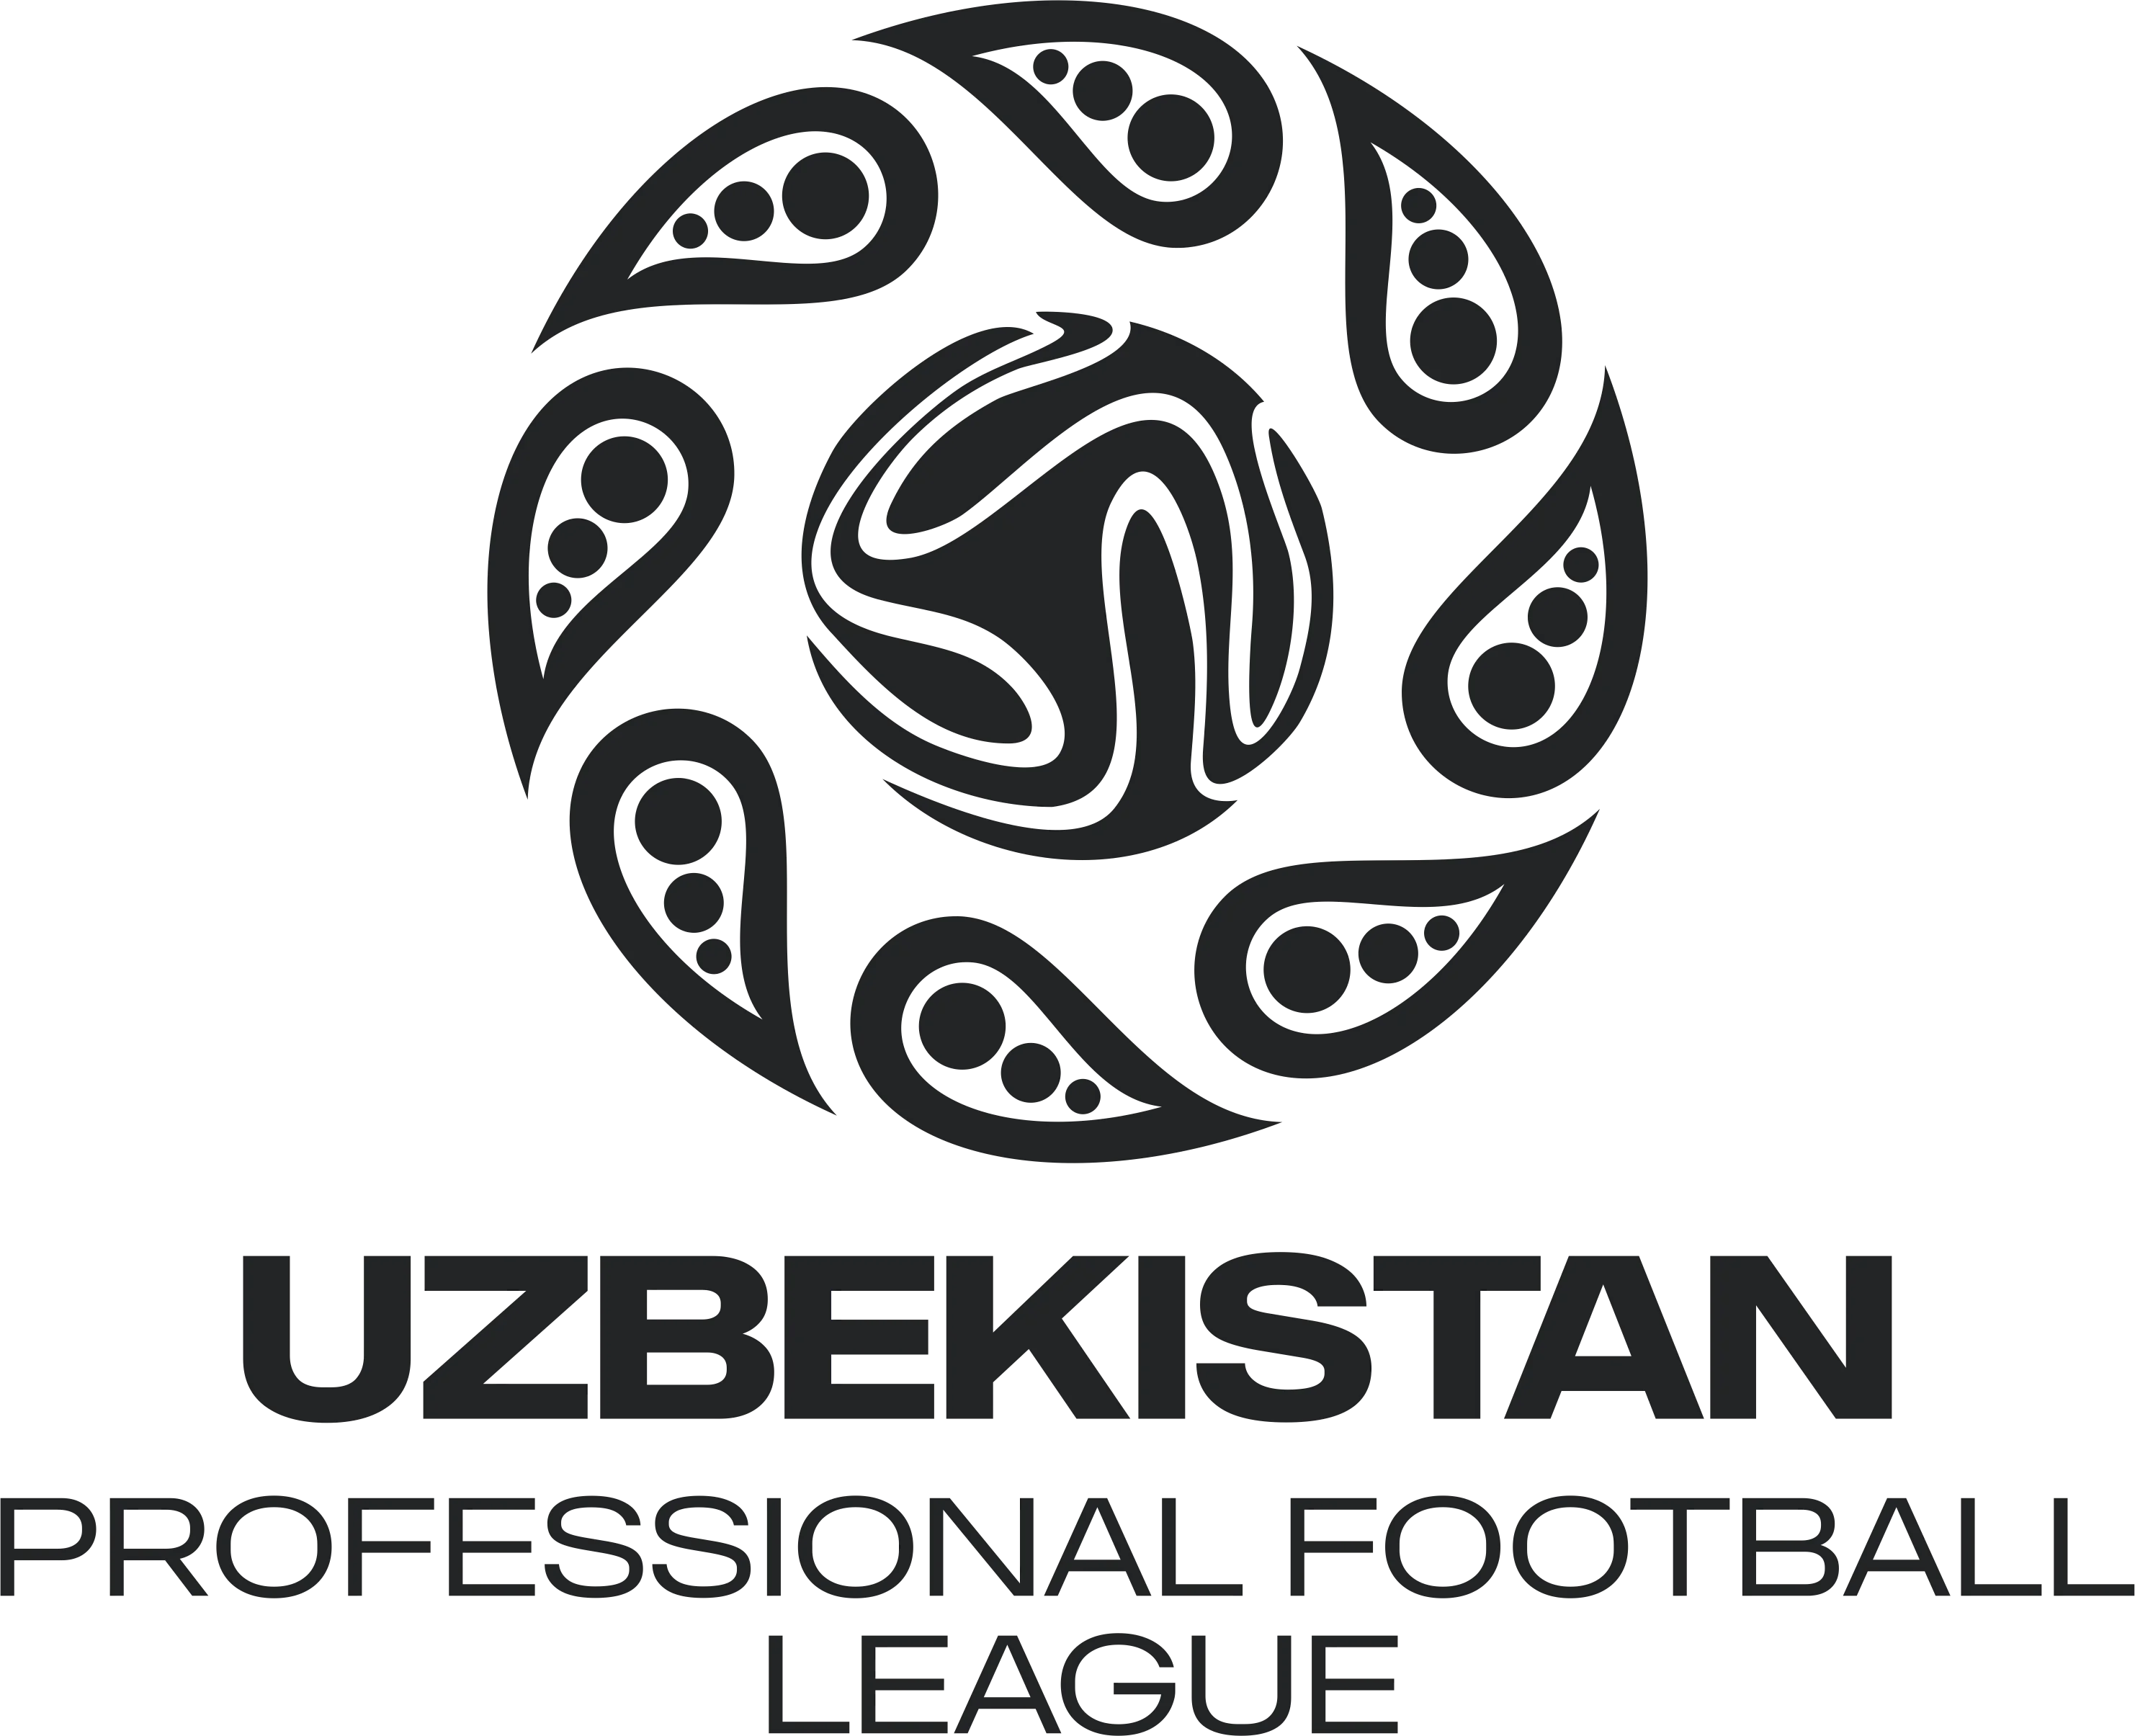 Giải vô địch quốc gia Uzbekistan